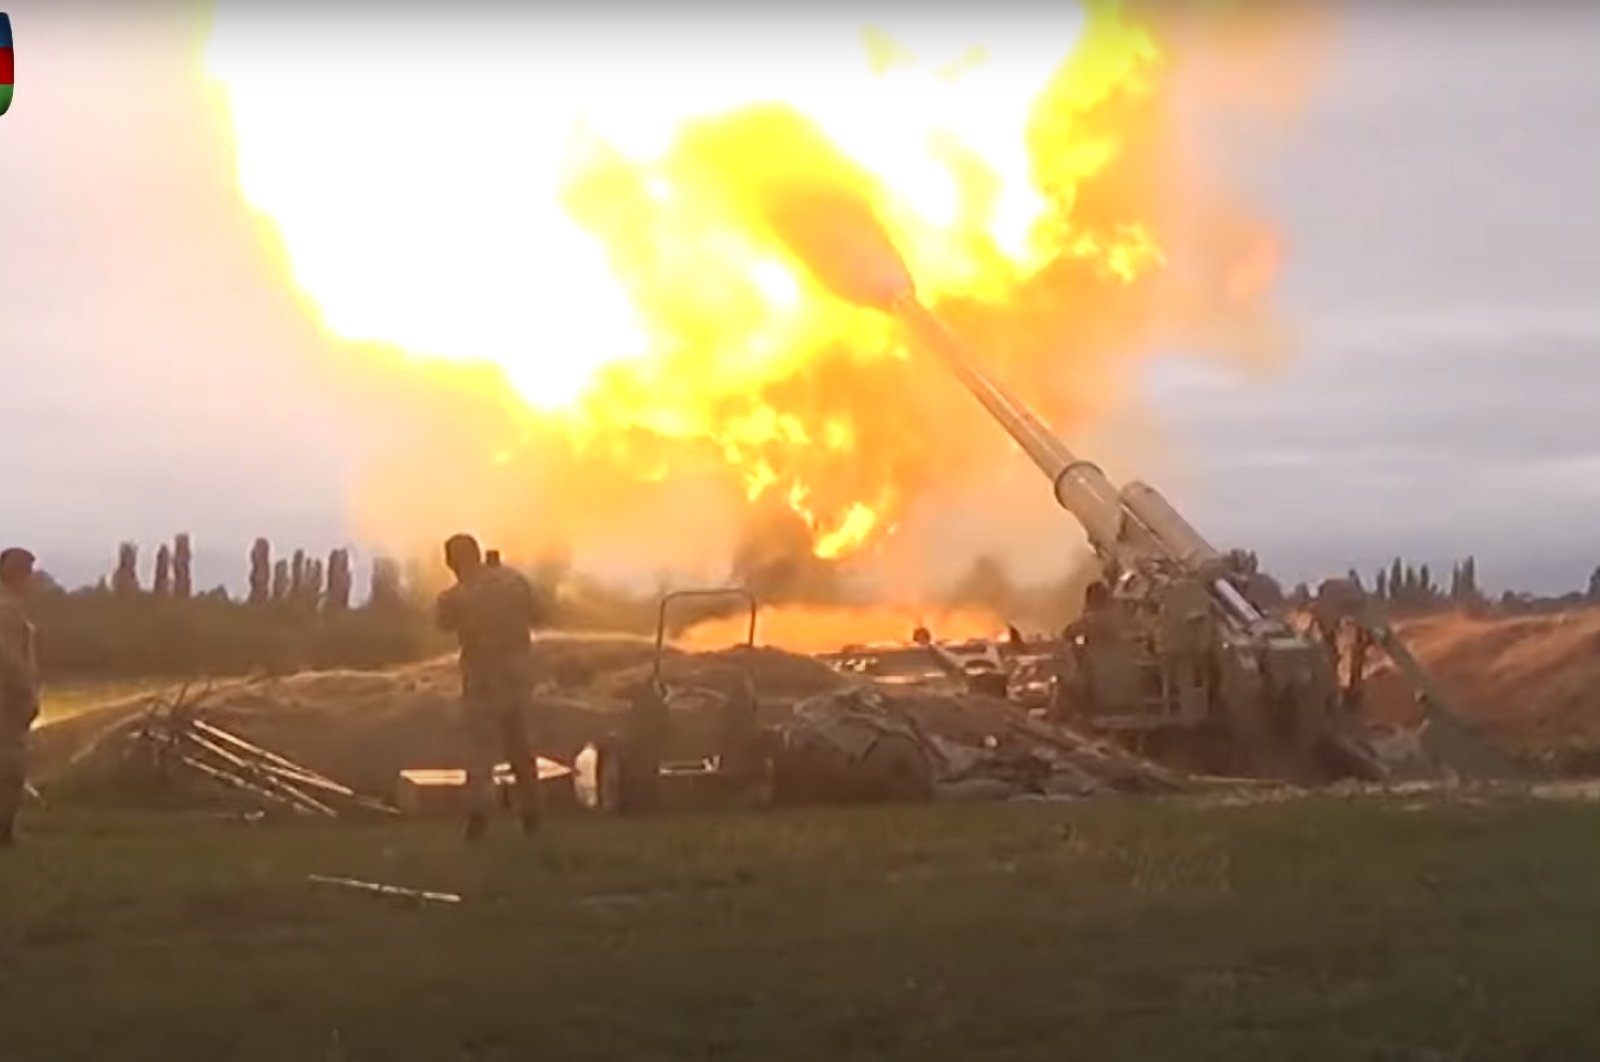 Azerbaijan fires artillery in the direction of enemy positions deployed in the Nagorno-Karabakh region, Sept. 28, 2020. (EPA / Azerbaijan Defense Ministry / Handout)